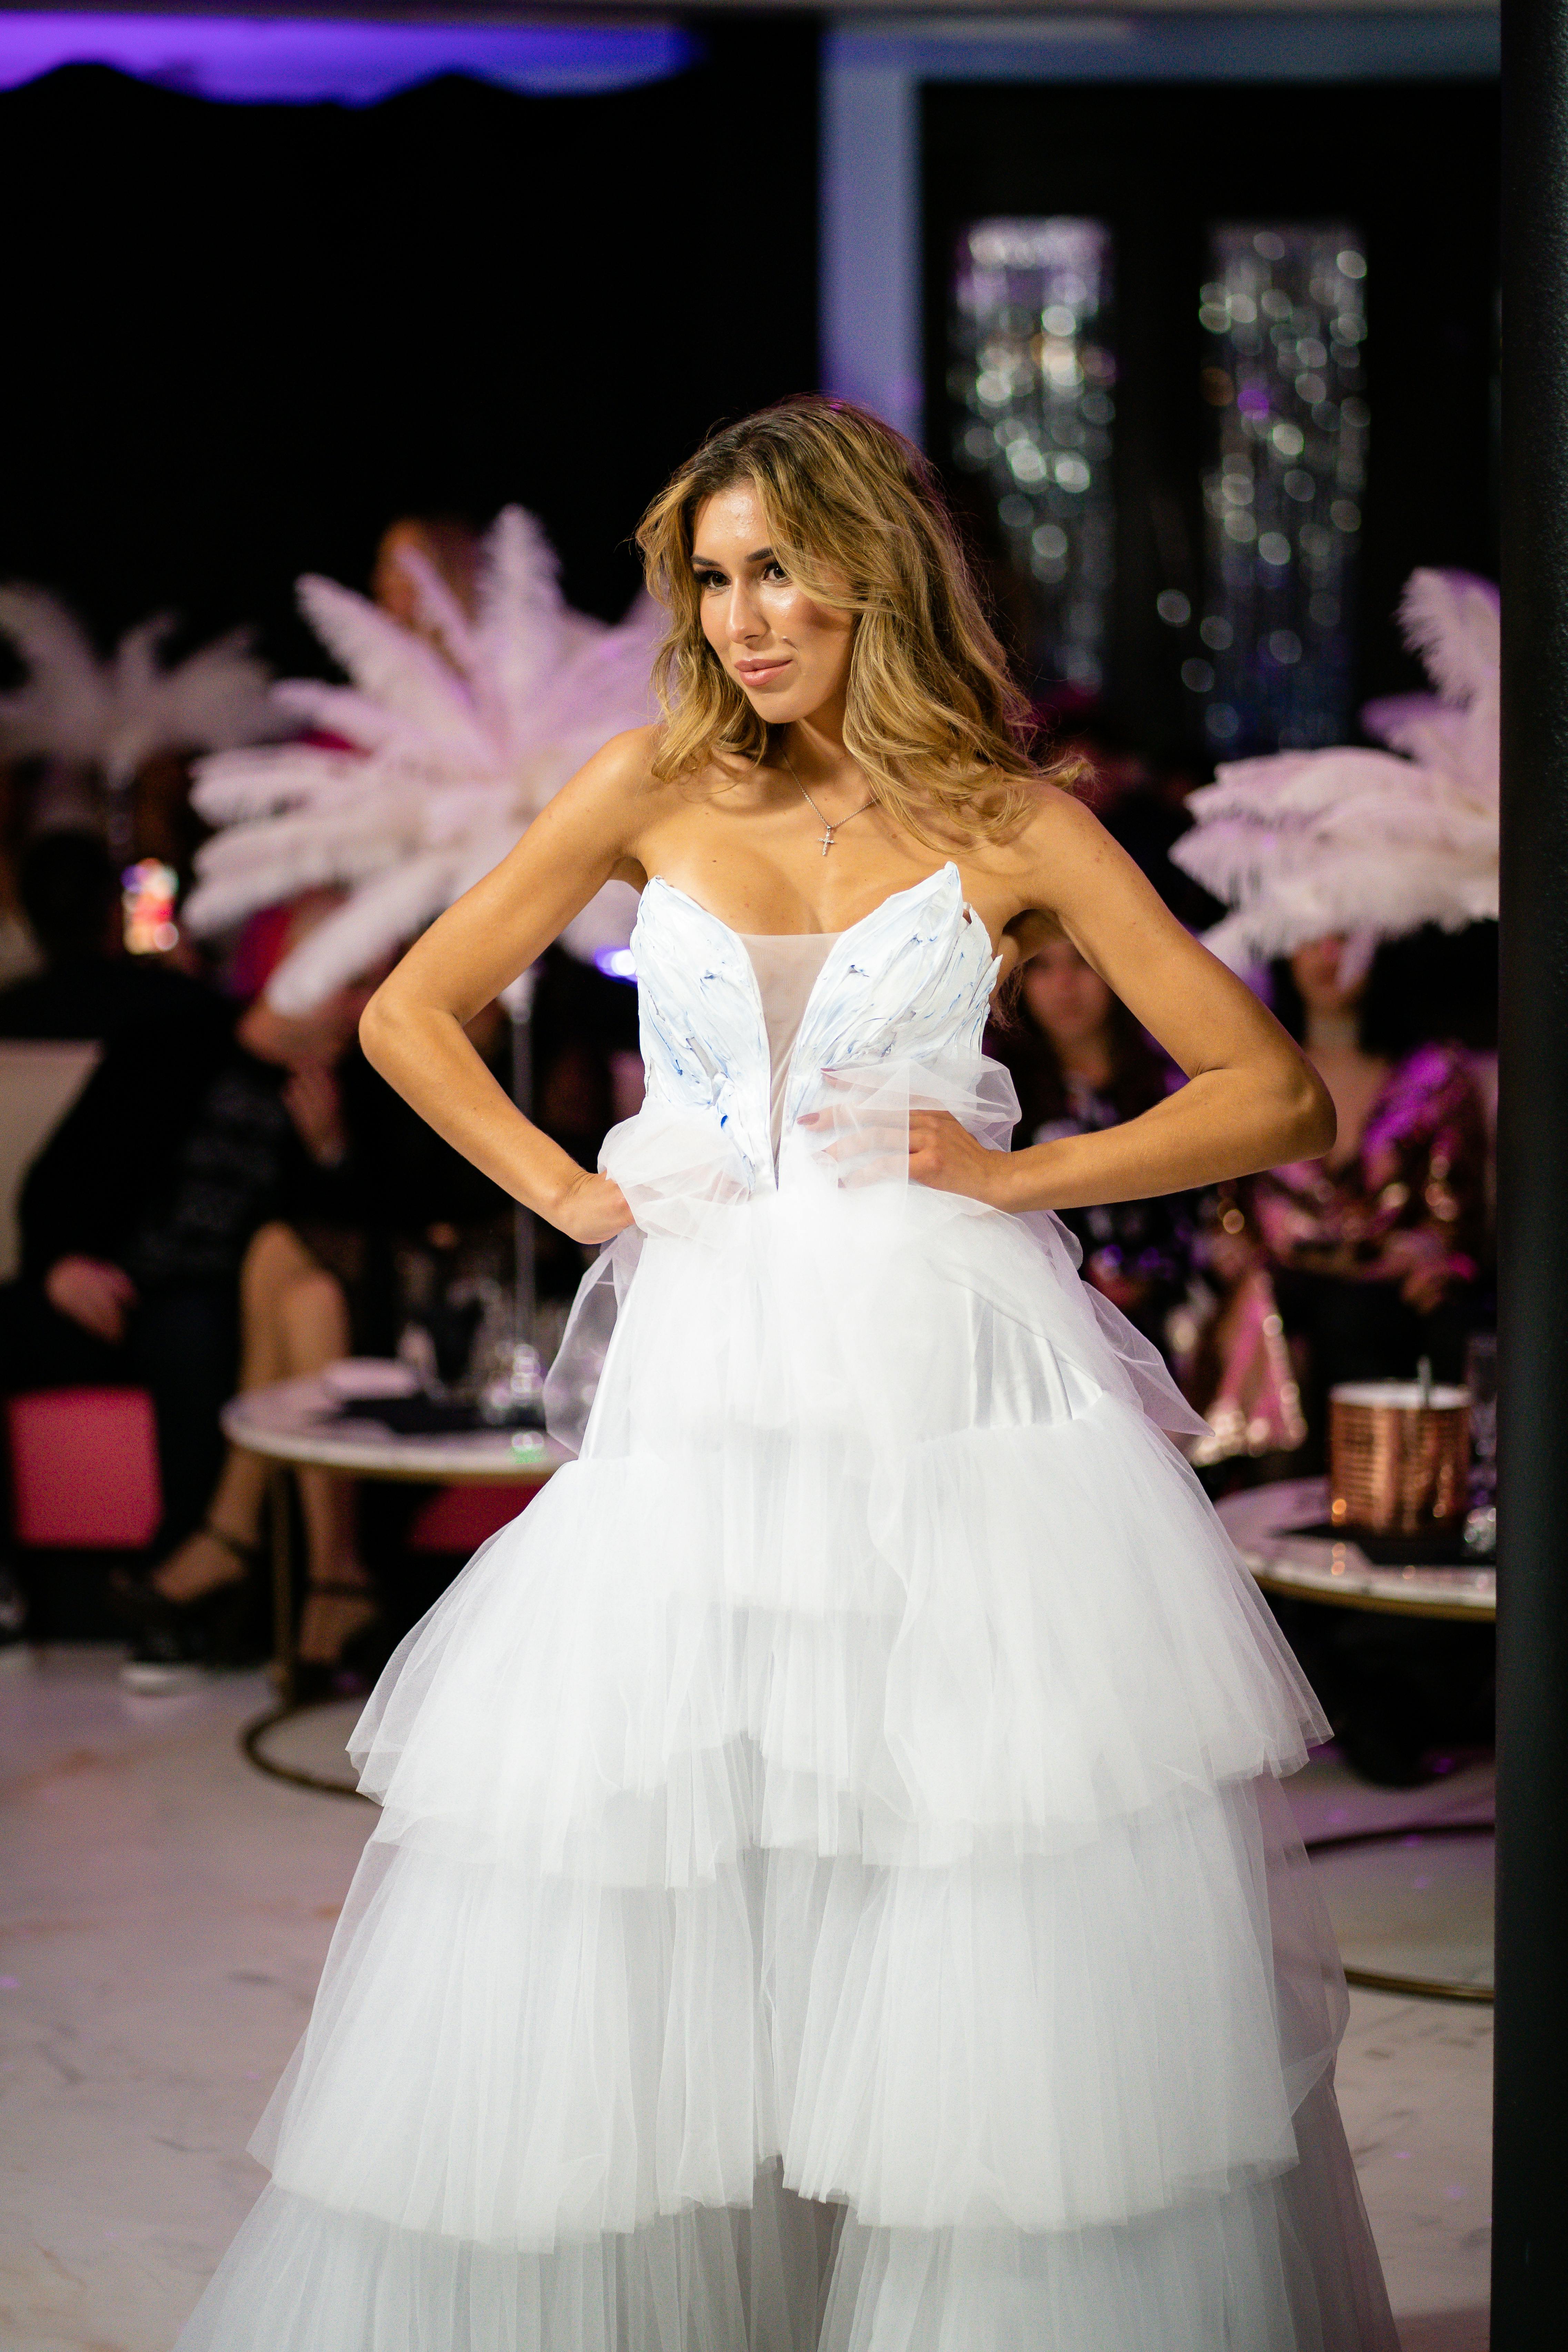 Bridal fashion show by alexandchris on DeviantArt